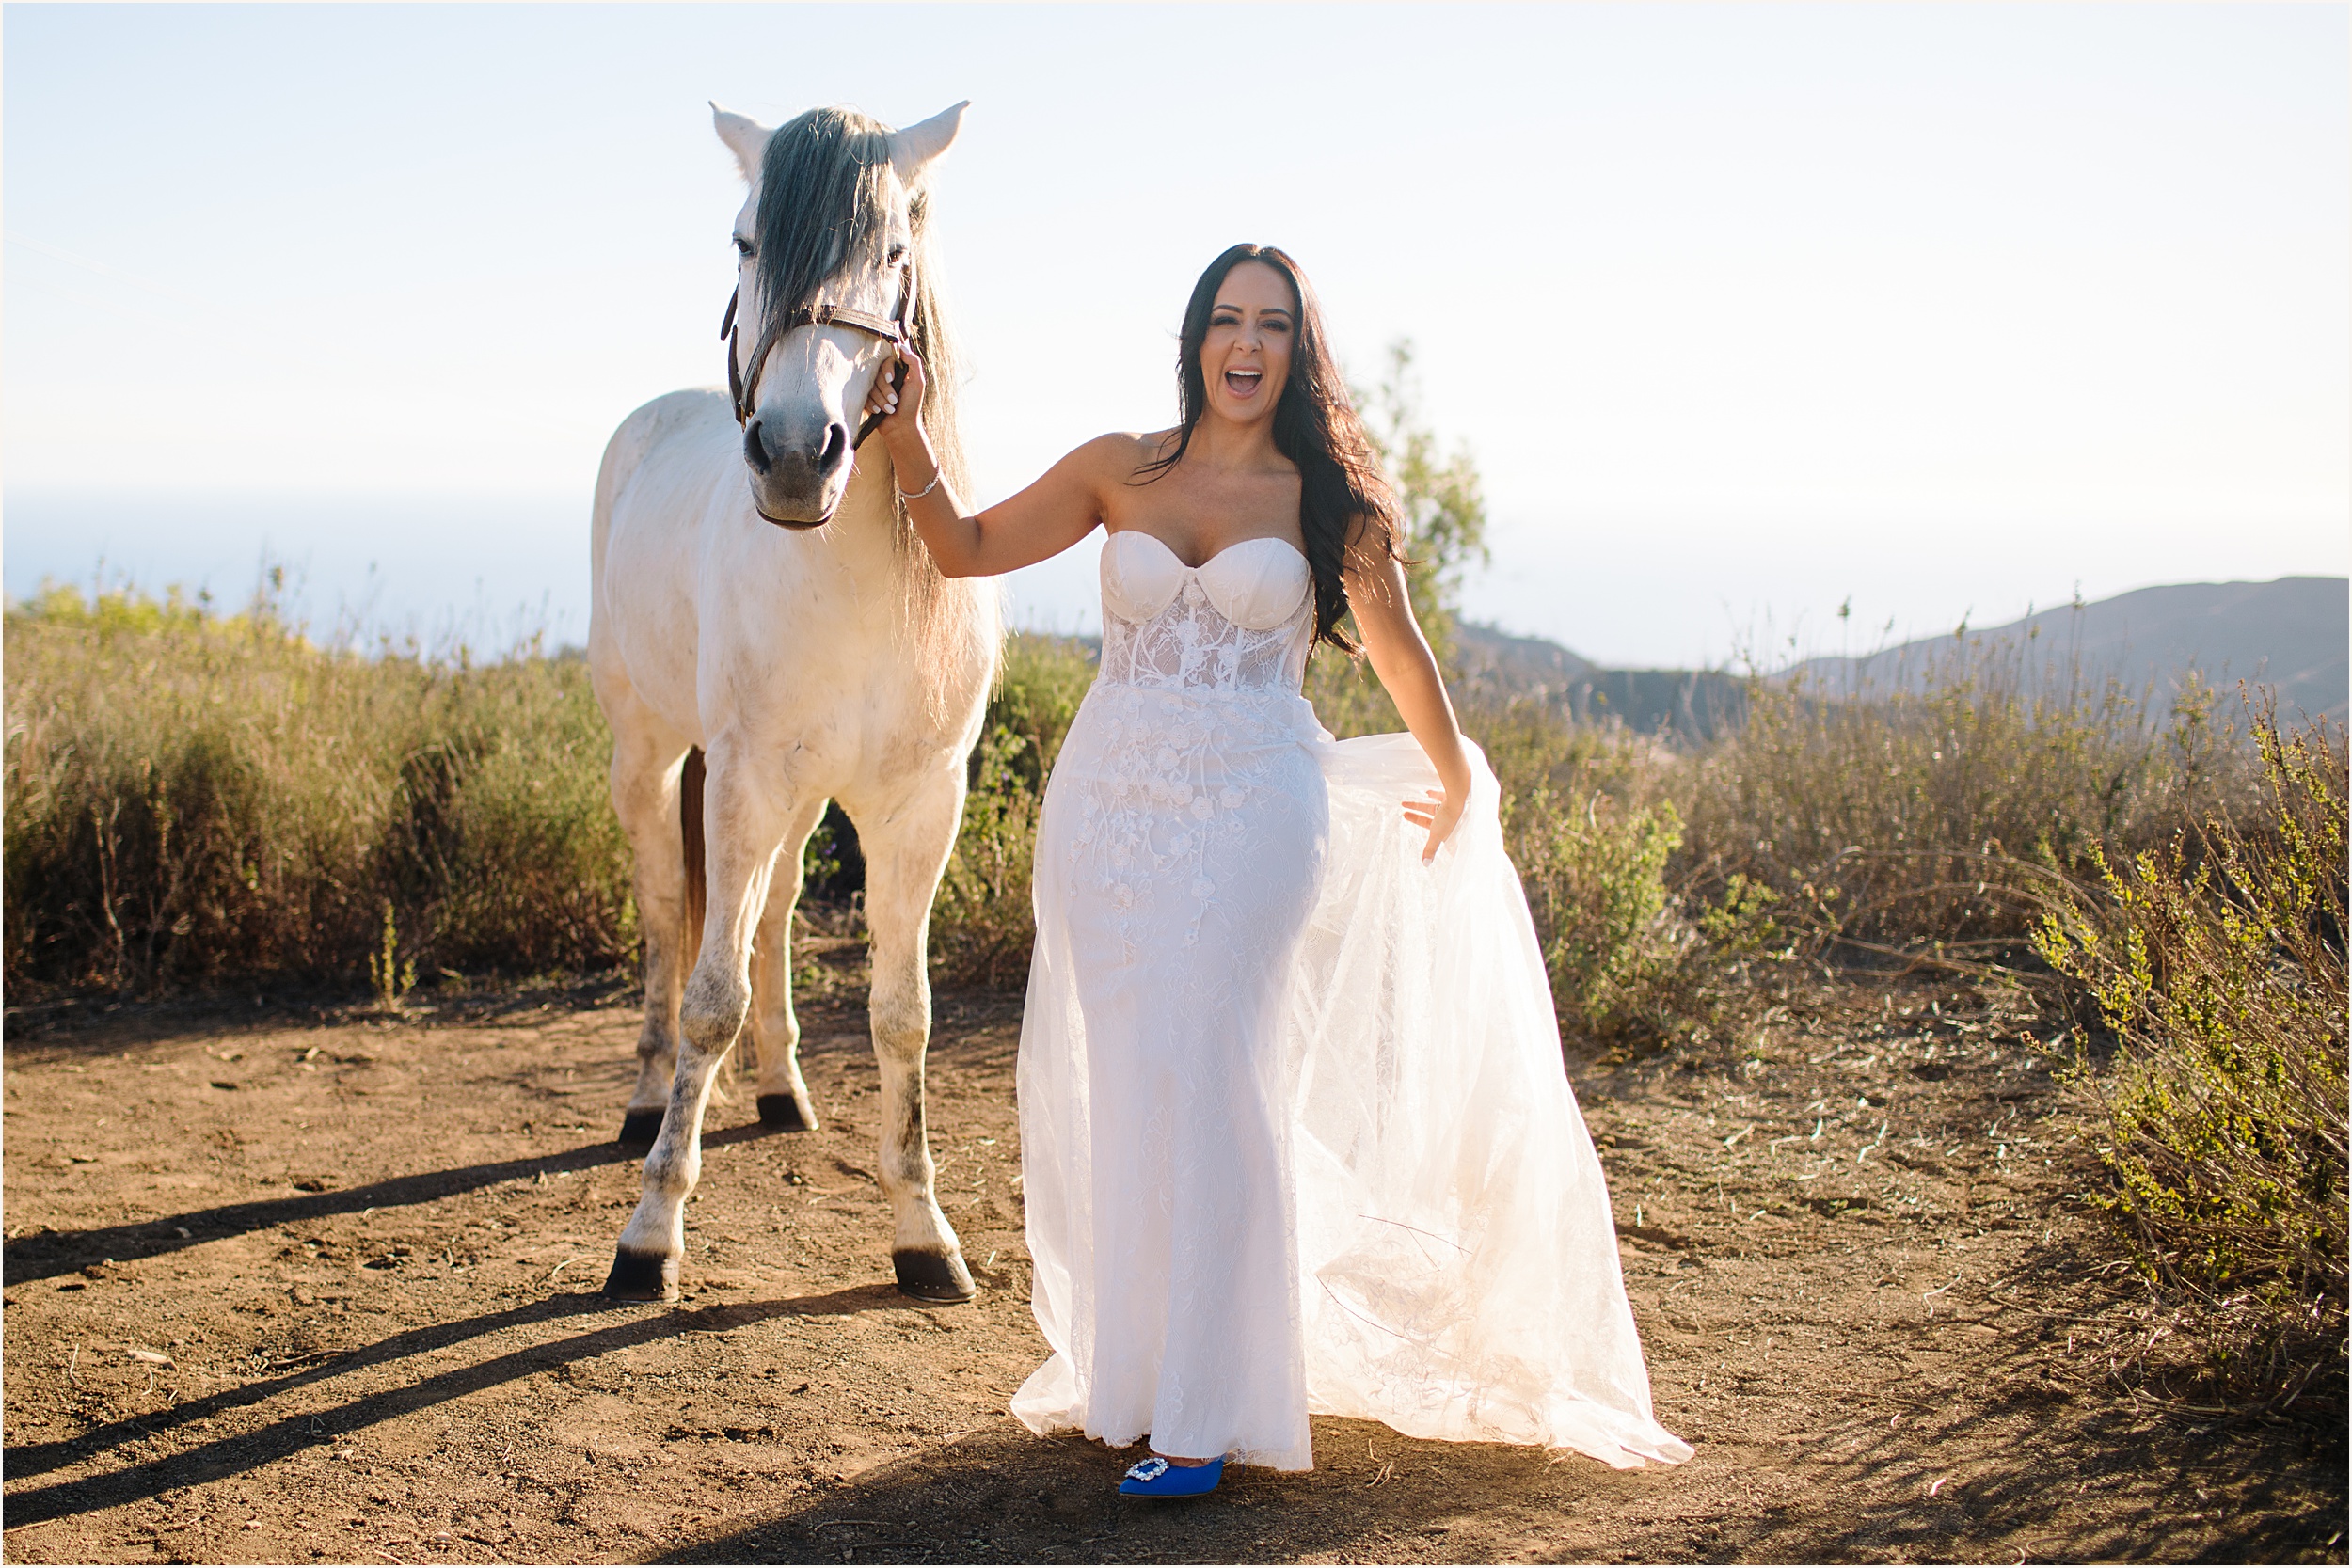 Malibu-Elopement-Photographer-Malibu-elopement-locations-Malibu-elopement-packages_0010 Nicole & Robert's Malibu Beach Elopement with Horses